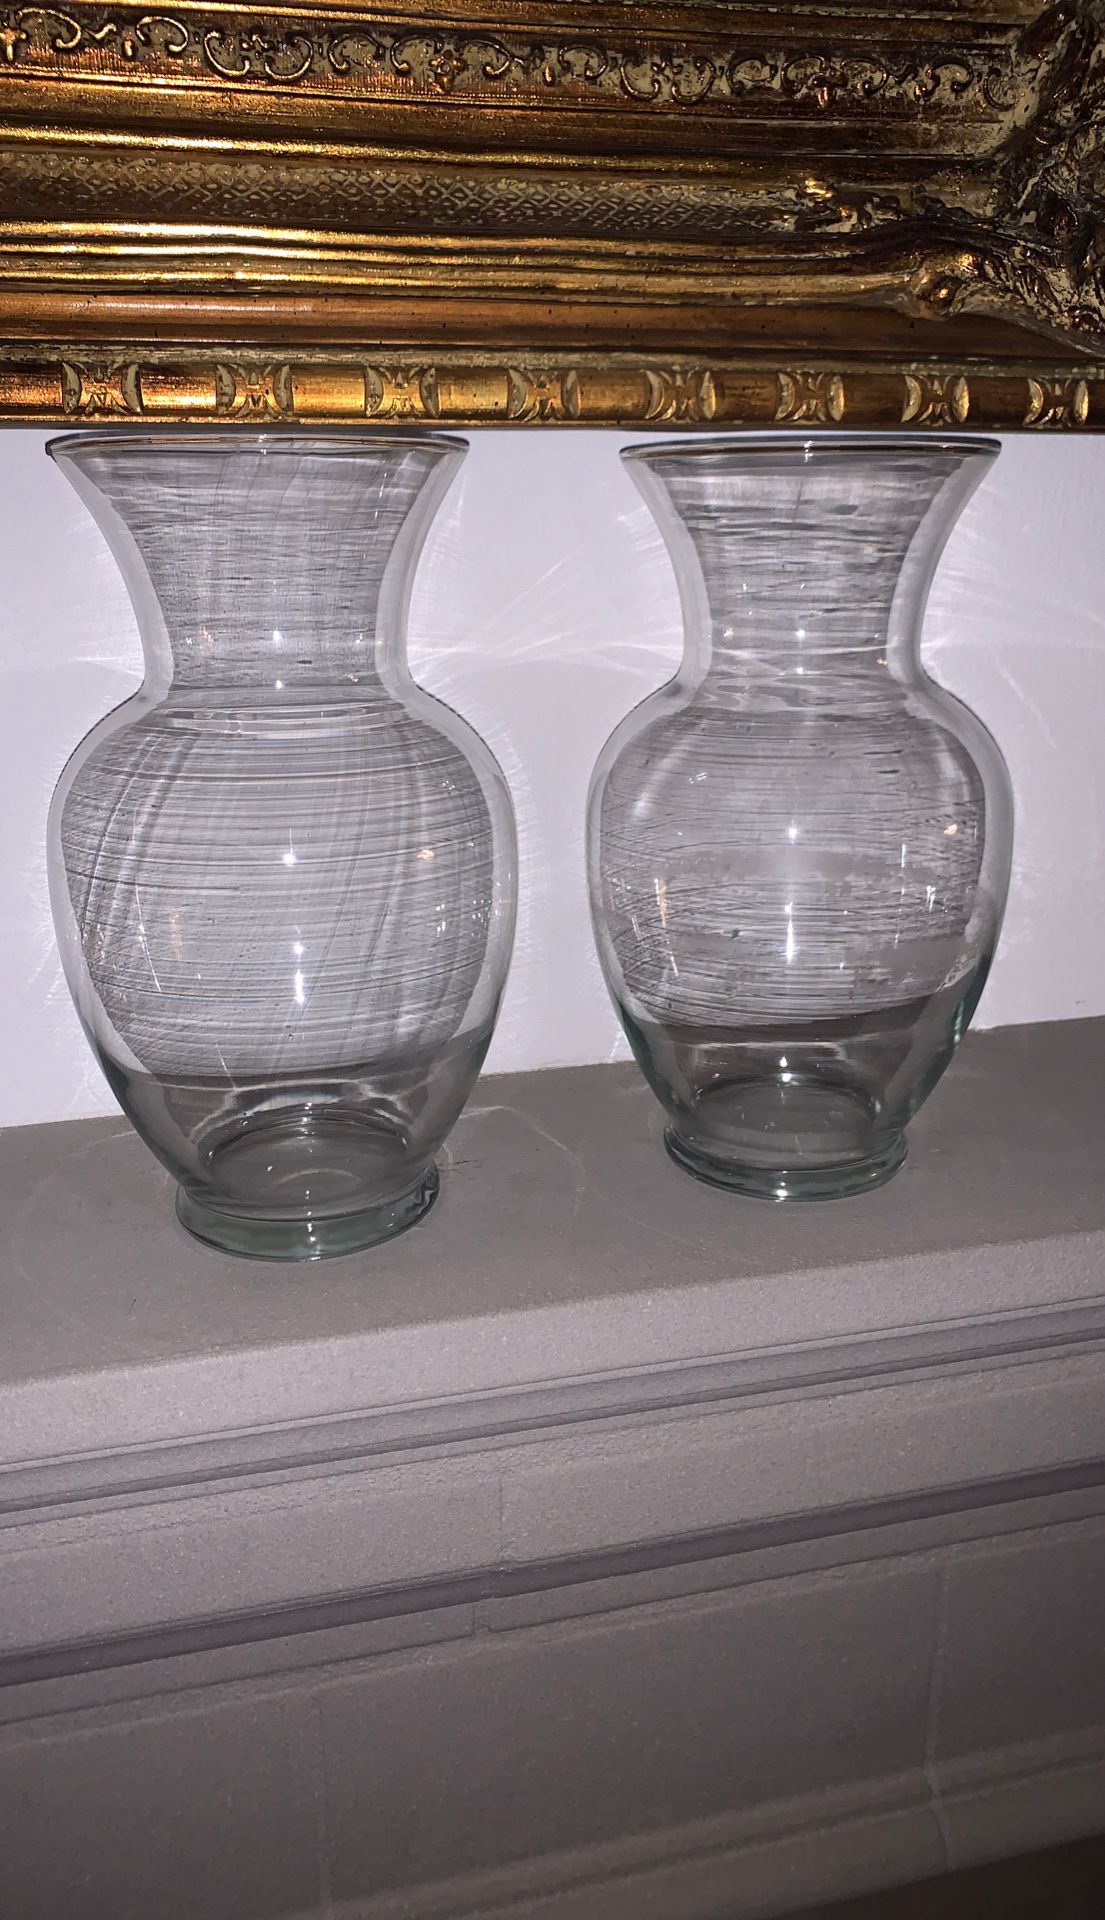 Beautiful glass flower vases